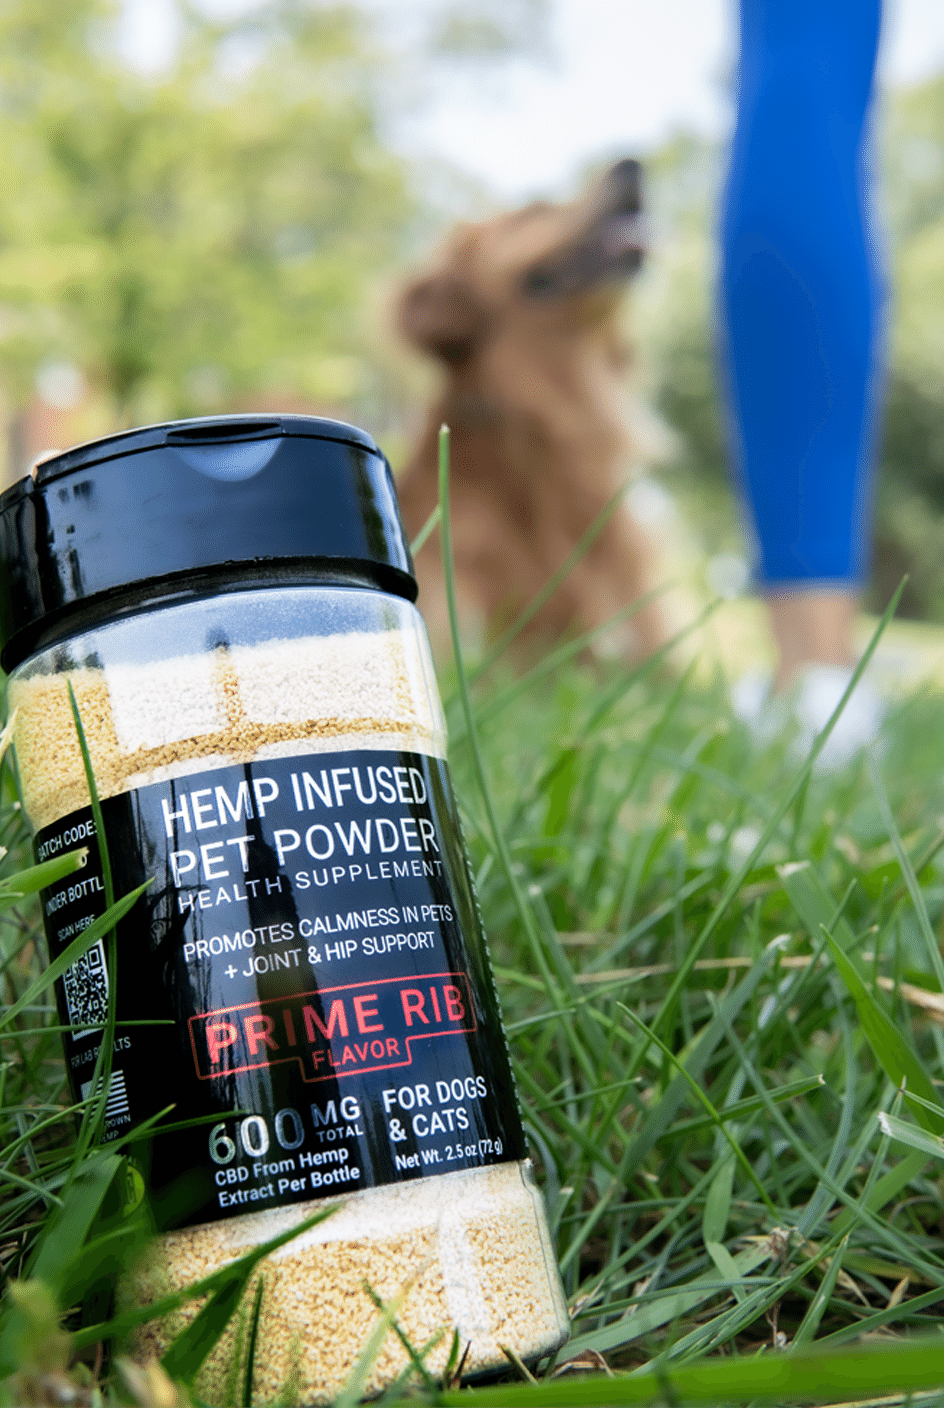 Female owner uses CBDOps hemp infused CBD pet powder product for her pet dog.